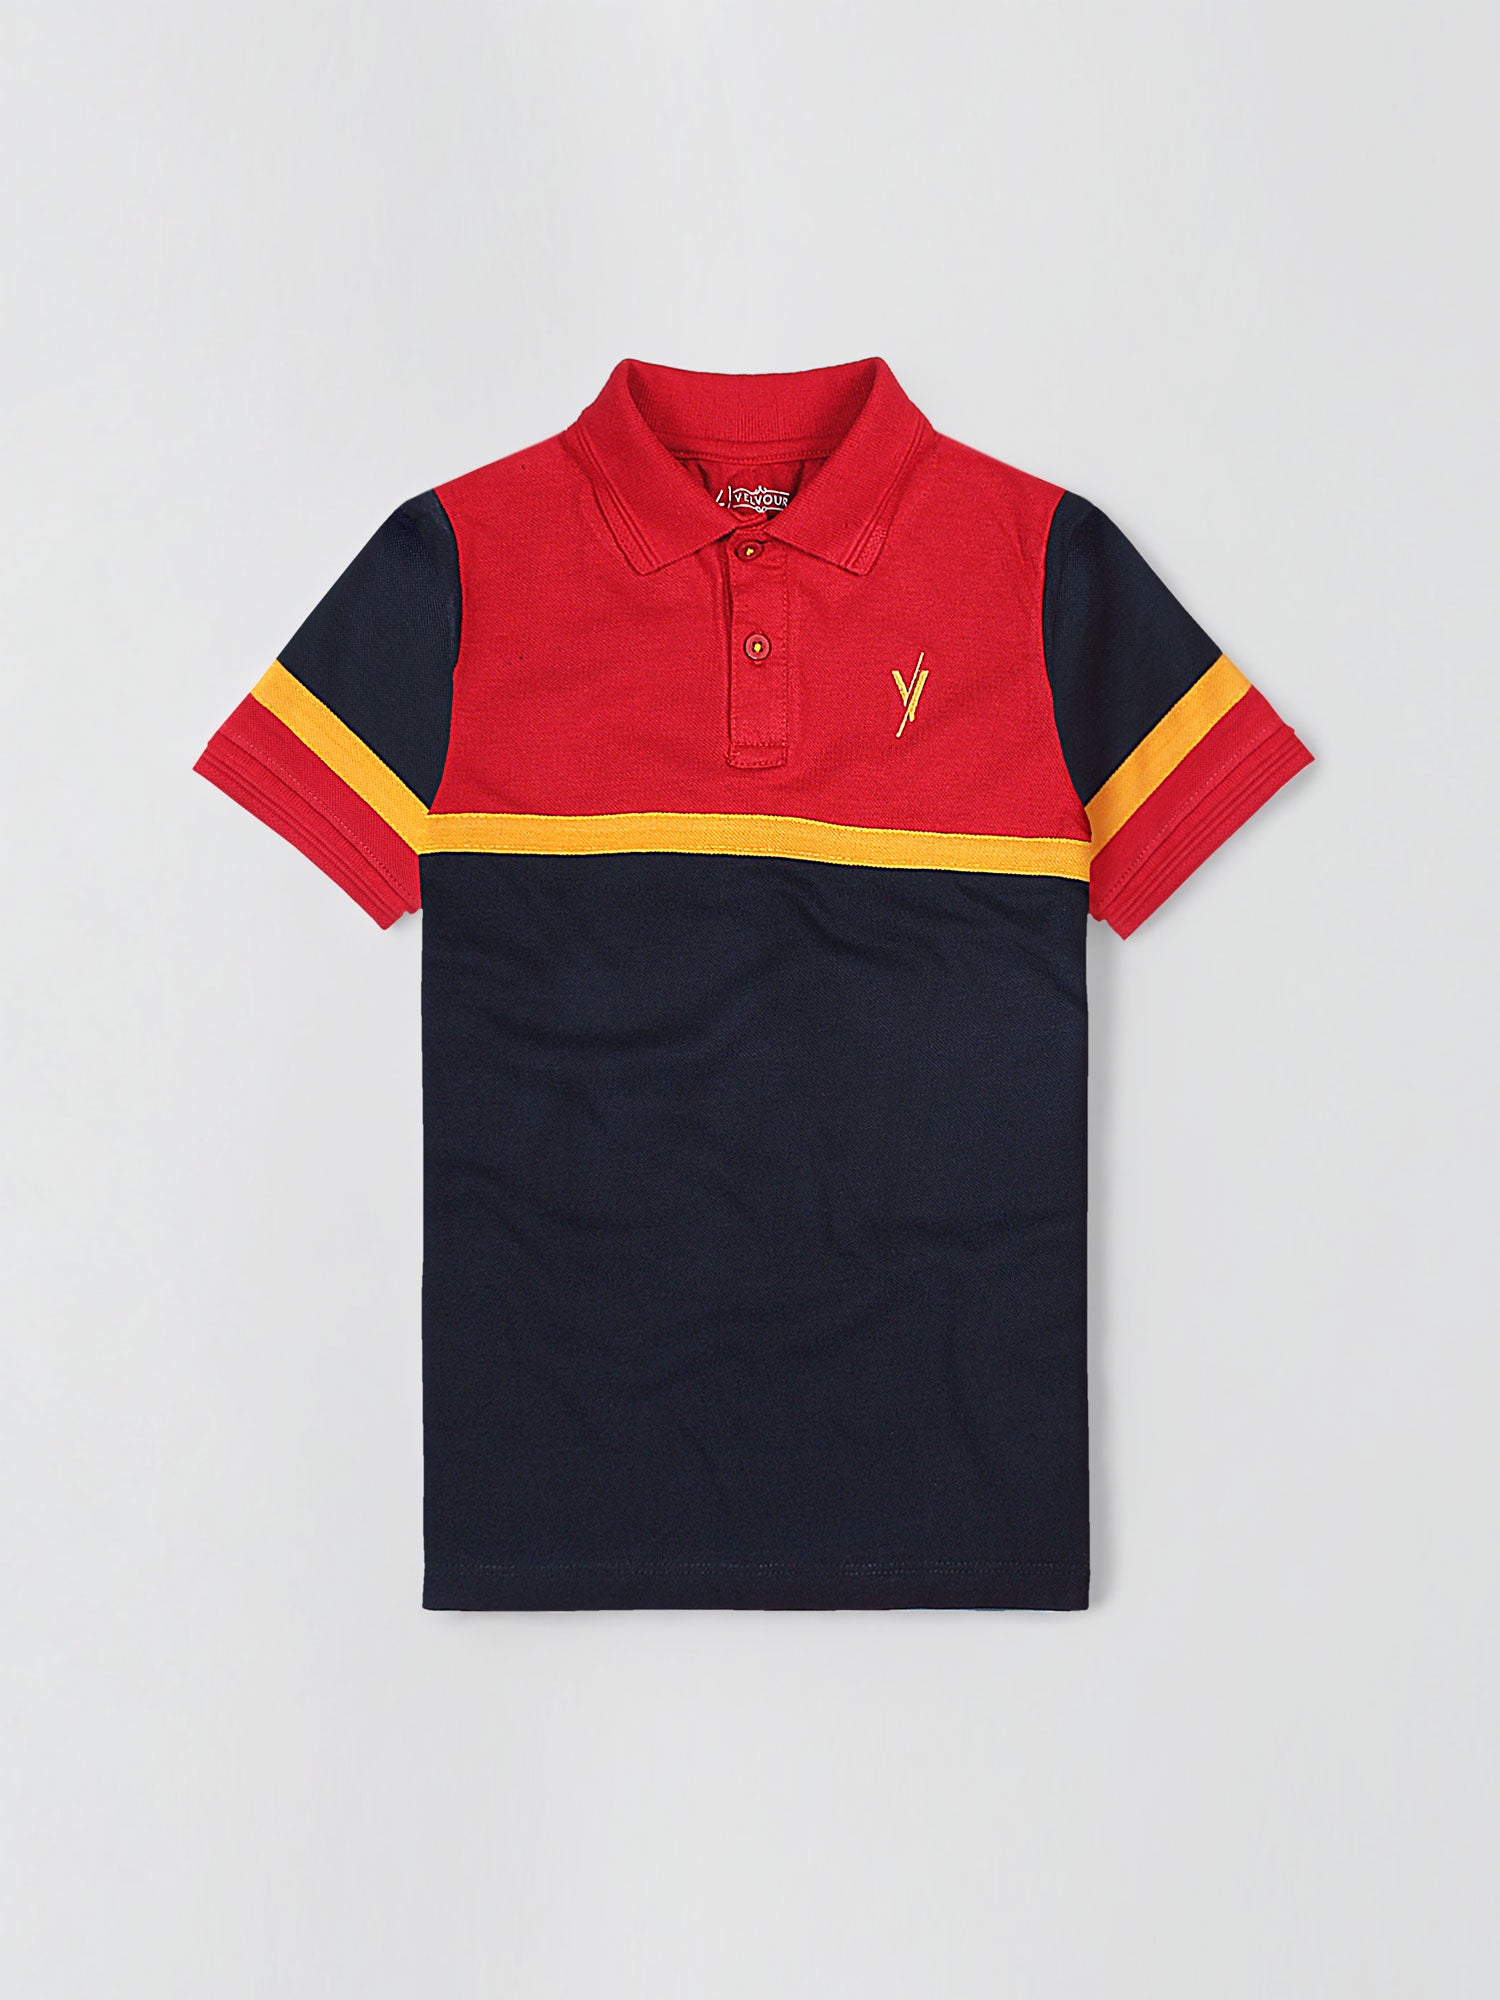 Boys Polo Shirt (Short Sleeve) By Velvour Art# VBP04-C - Velvour Shop